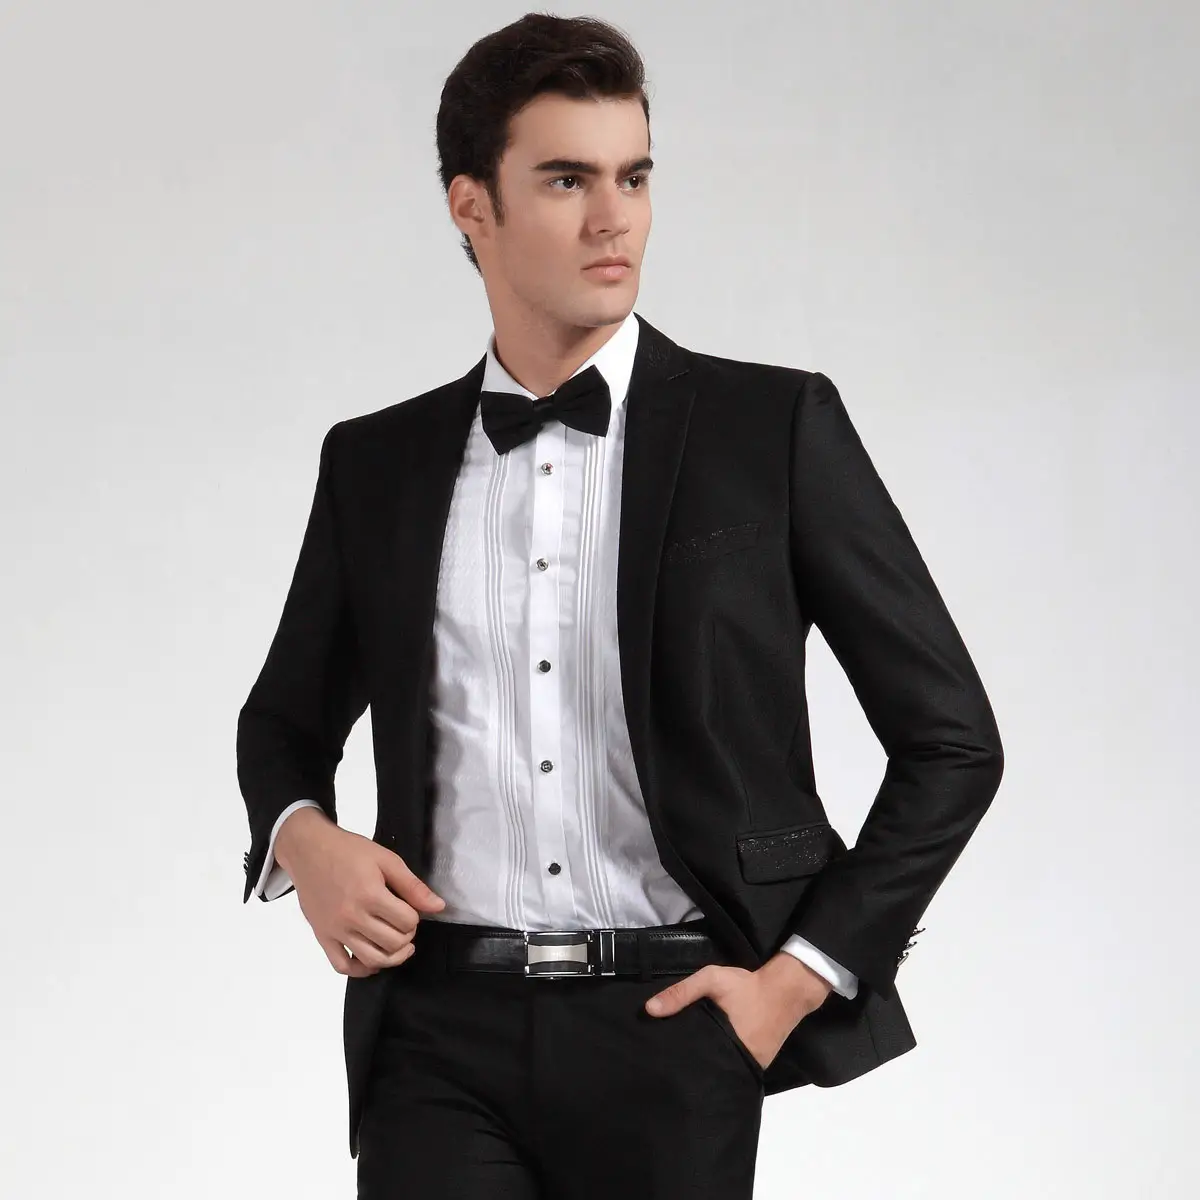 15 Wedding Suits For Men